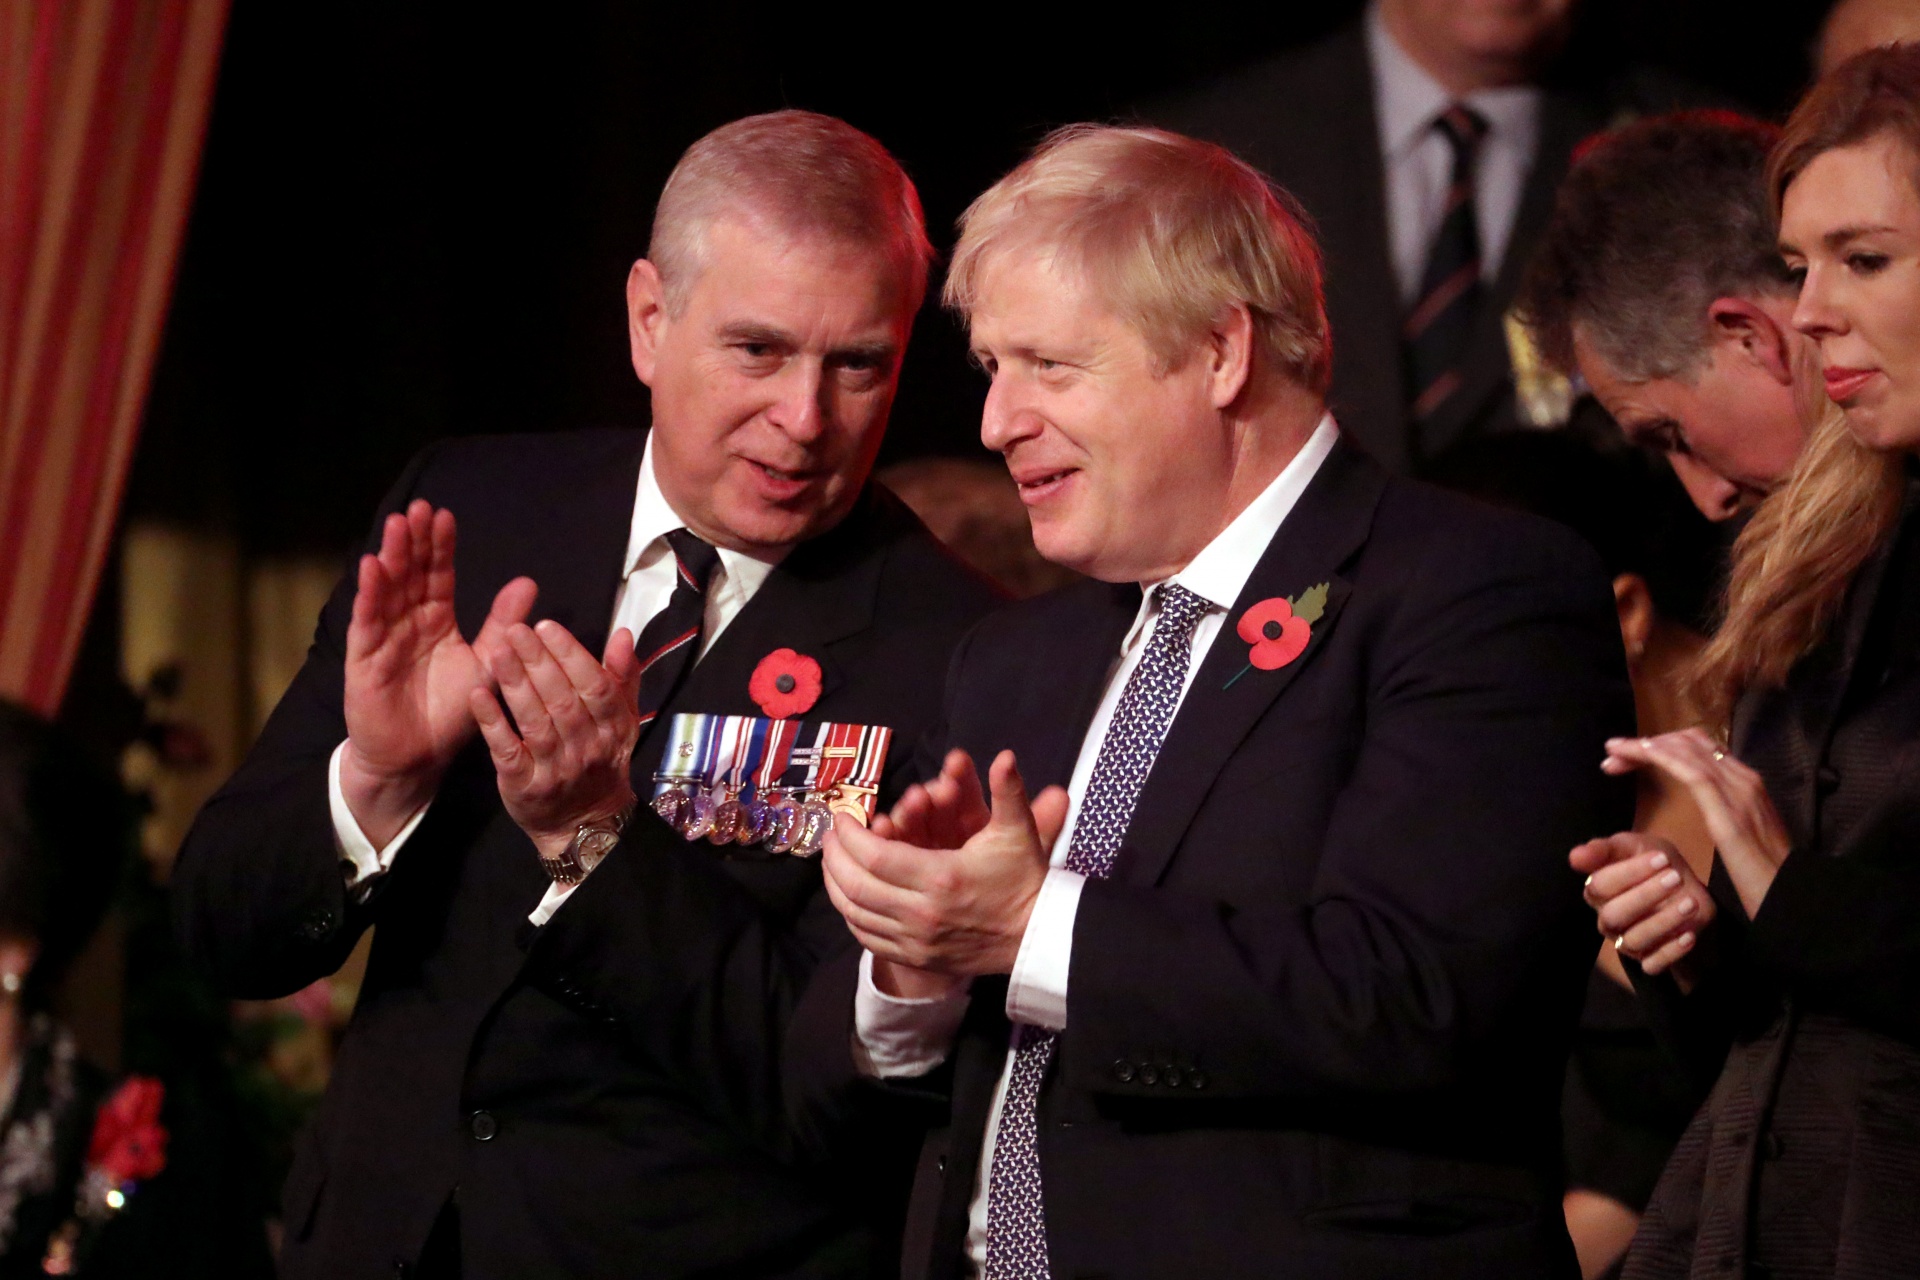 Andrew Windsor and Prime Minister Boris Johnson